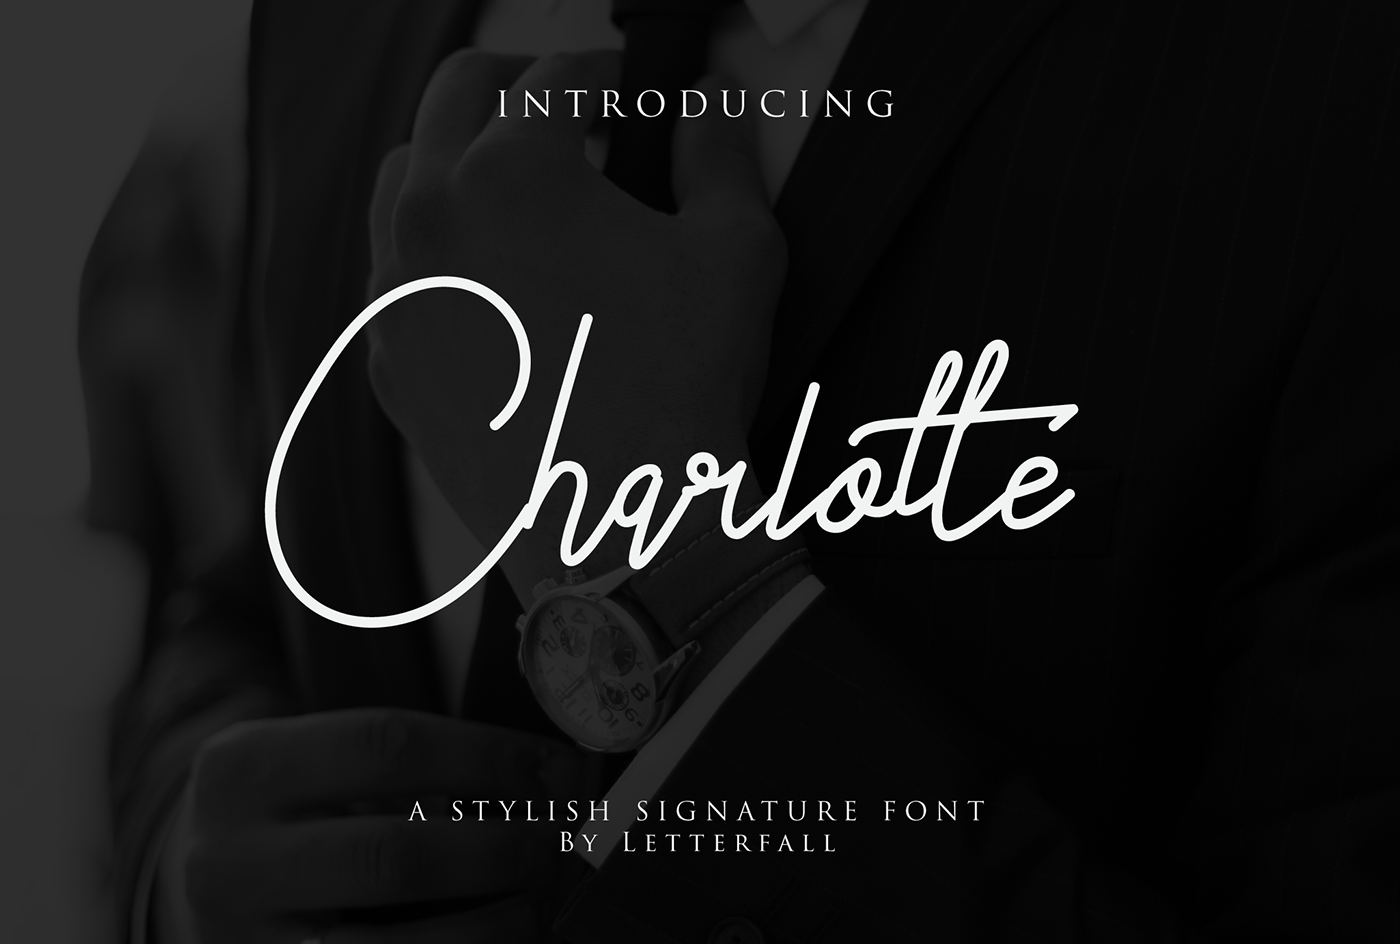 signature letterface freefont Script modern classy watermark business branding 